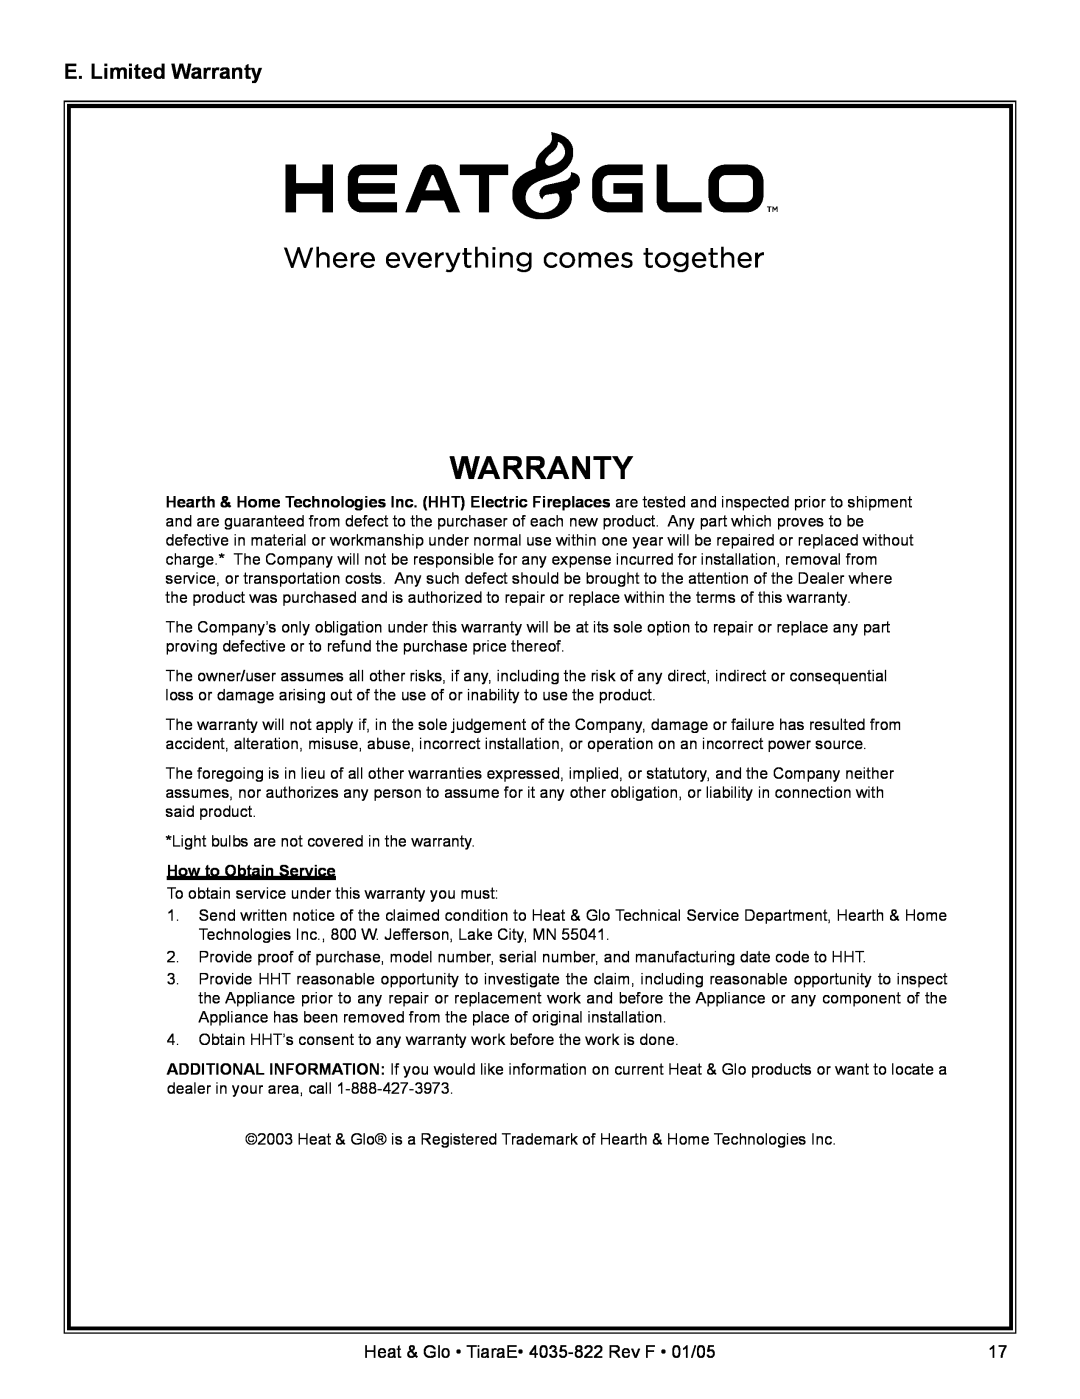 Heat & Glo LifeStyle TiaraE 4035-822 manual E. Limited Warranty, How to Obtain Service 